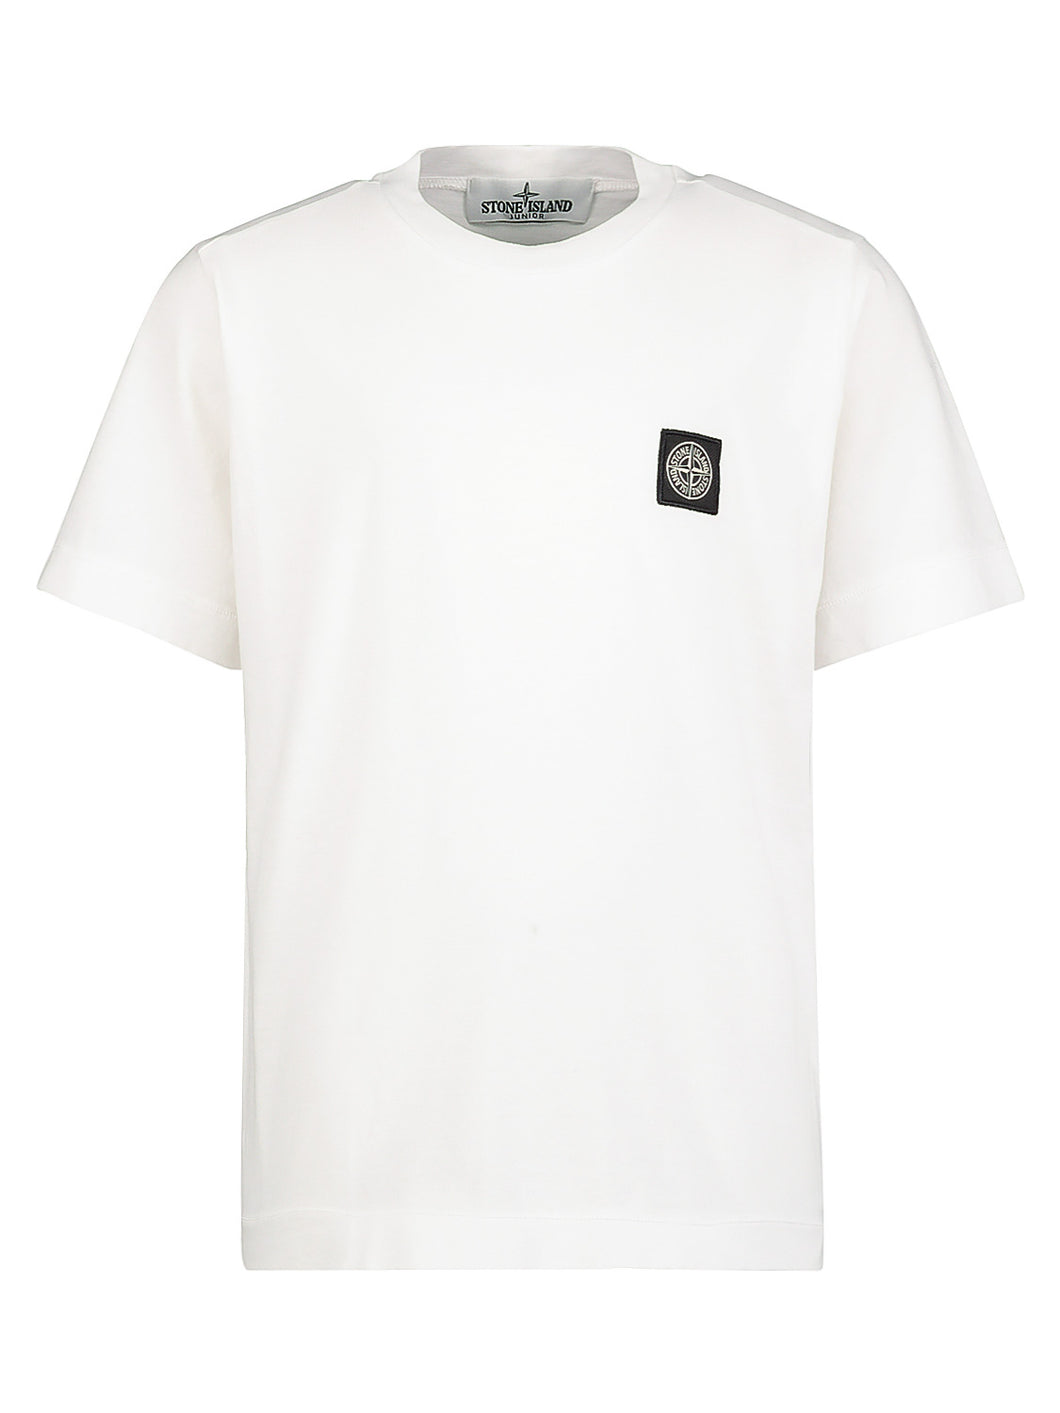 T-shirt Stone Island bianca - Junior & Co.it